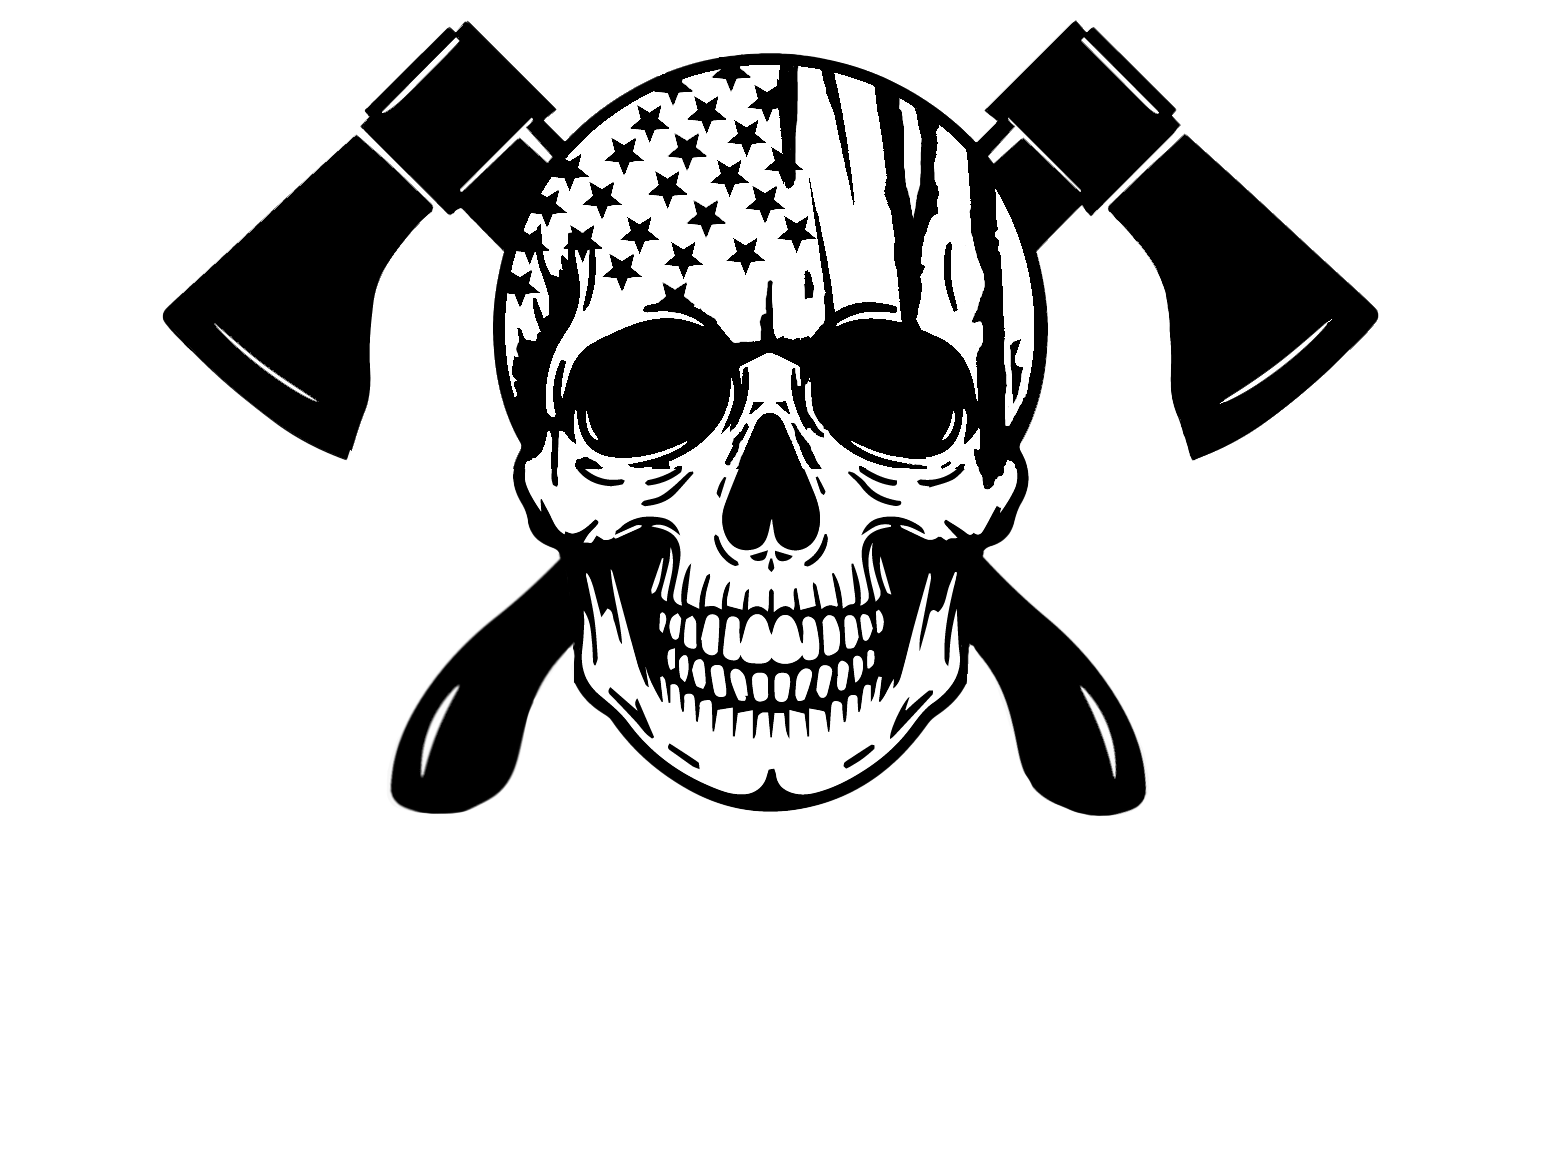 Warrior Throwing American flag skull and axes logo.